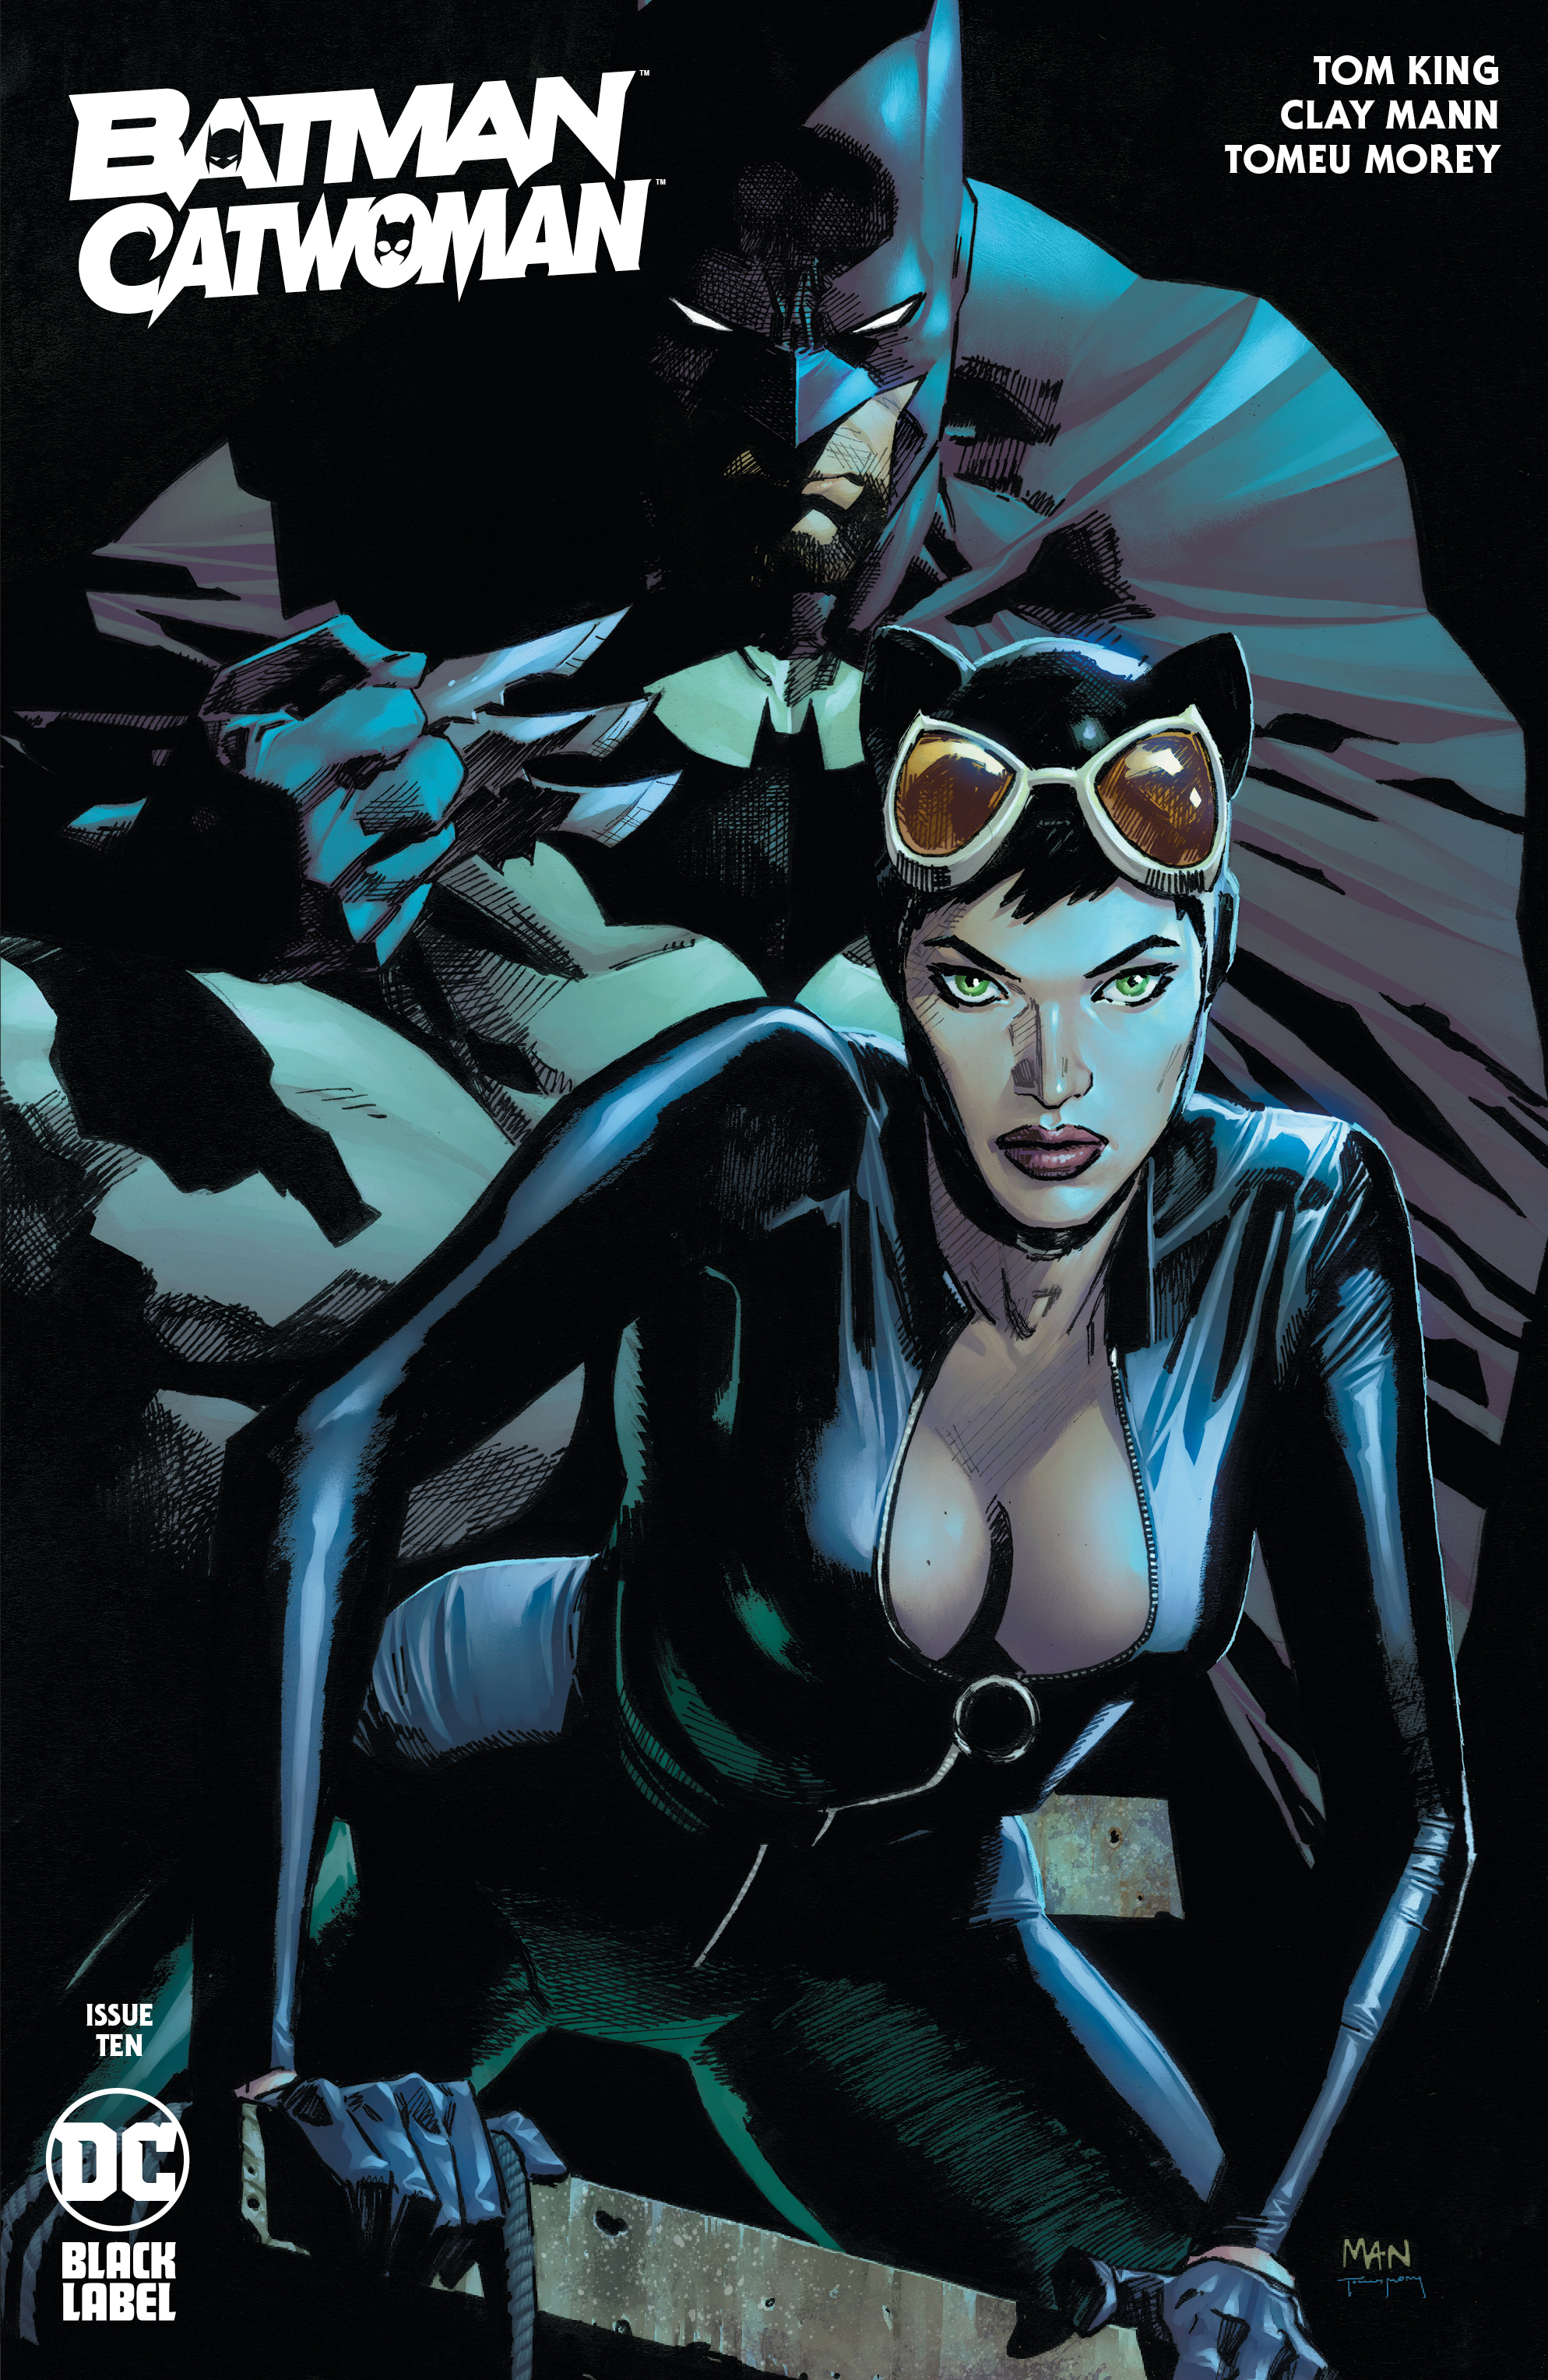 Batman Catwoman #10 (Of 12) Cover A Clay Mann (Mature)